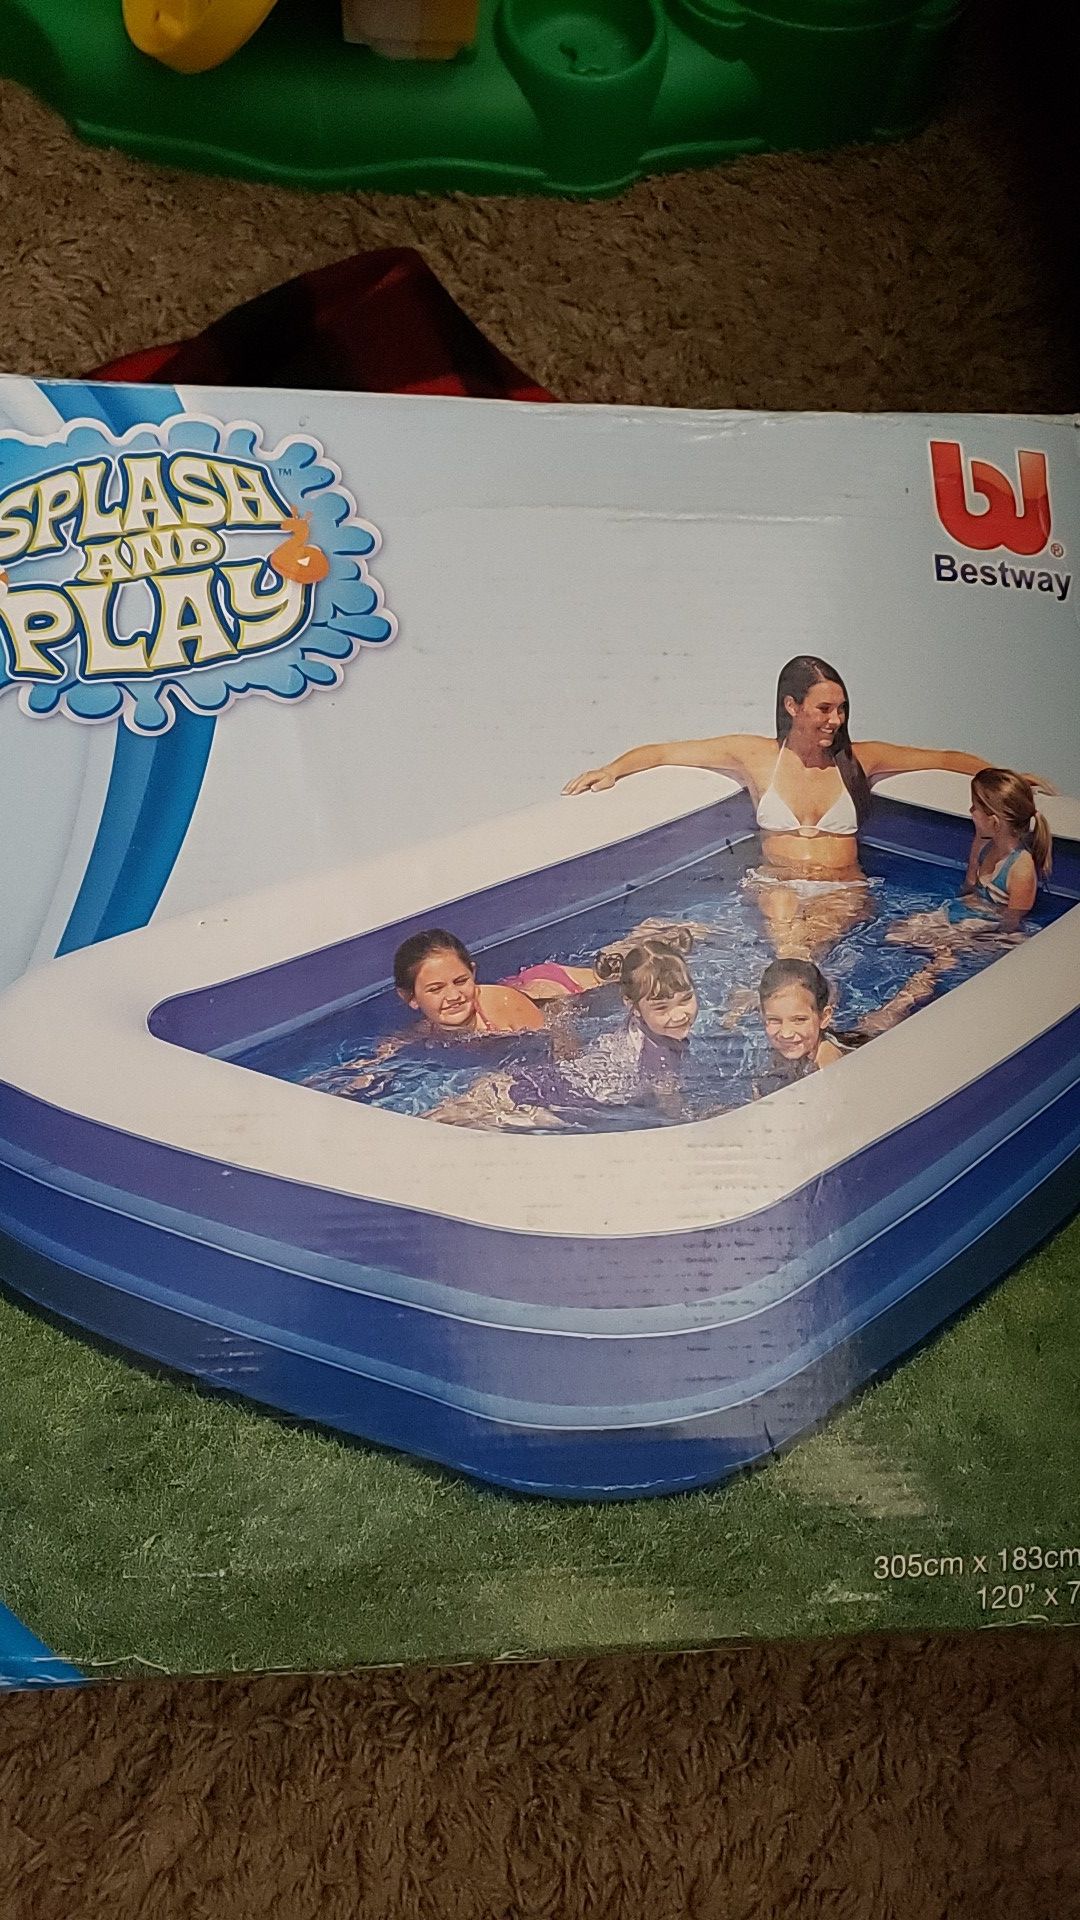 Splash and play pool